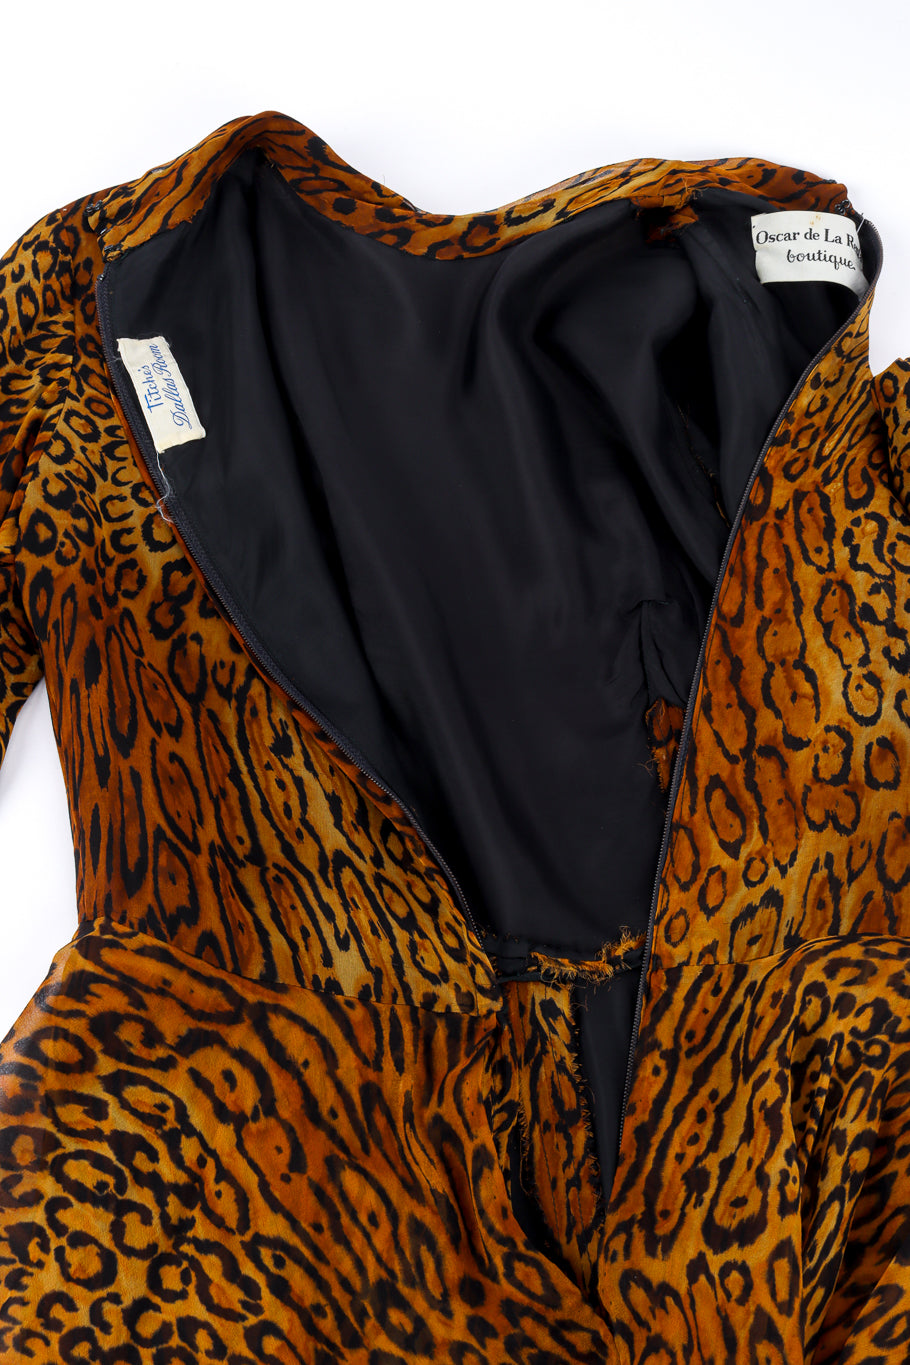 Vintage Oscar de la Renta Leopard Silk Jumpsuit back unzipped @recessla